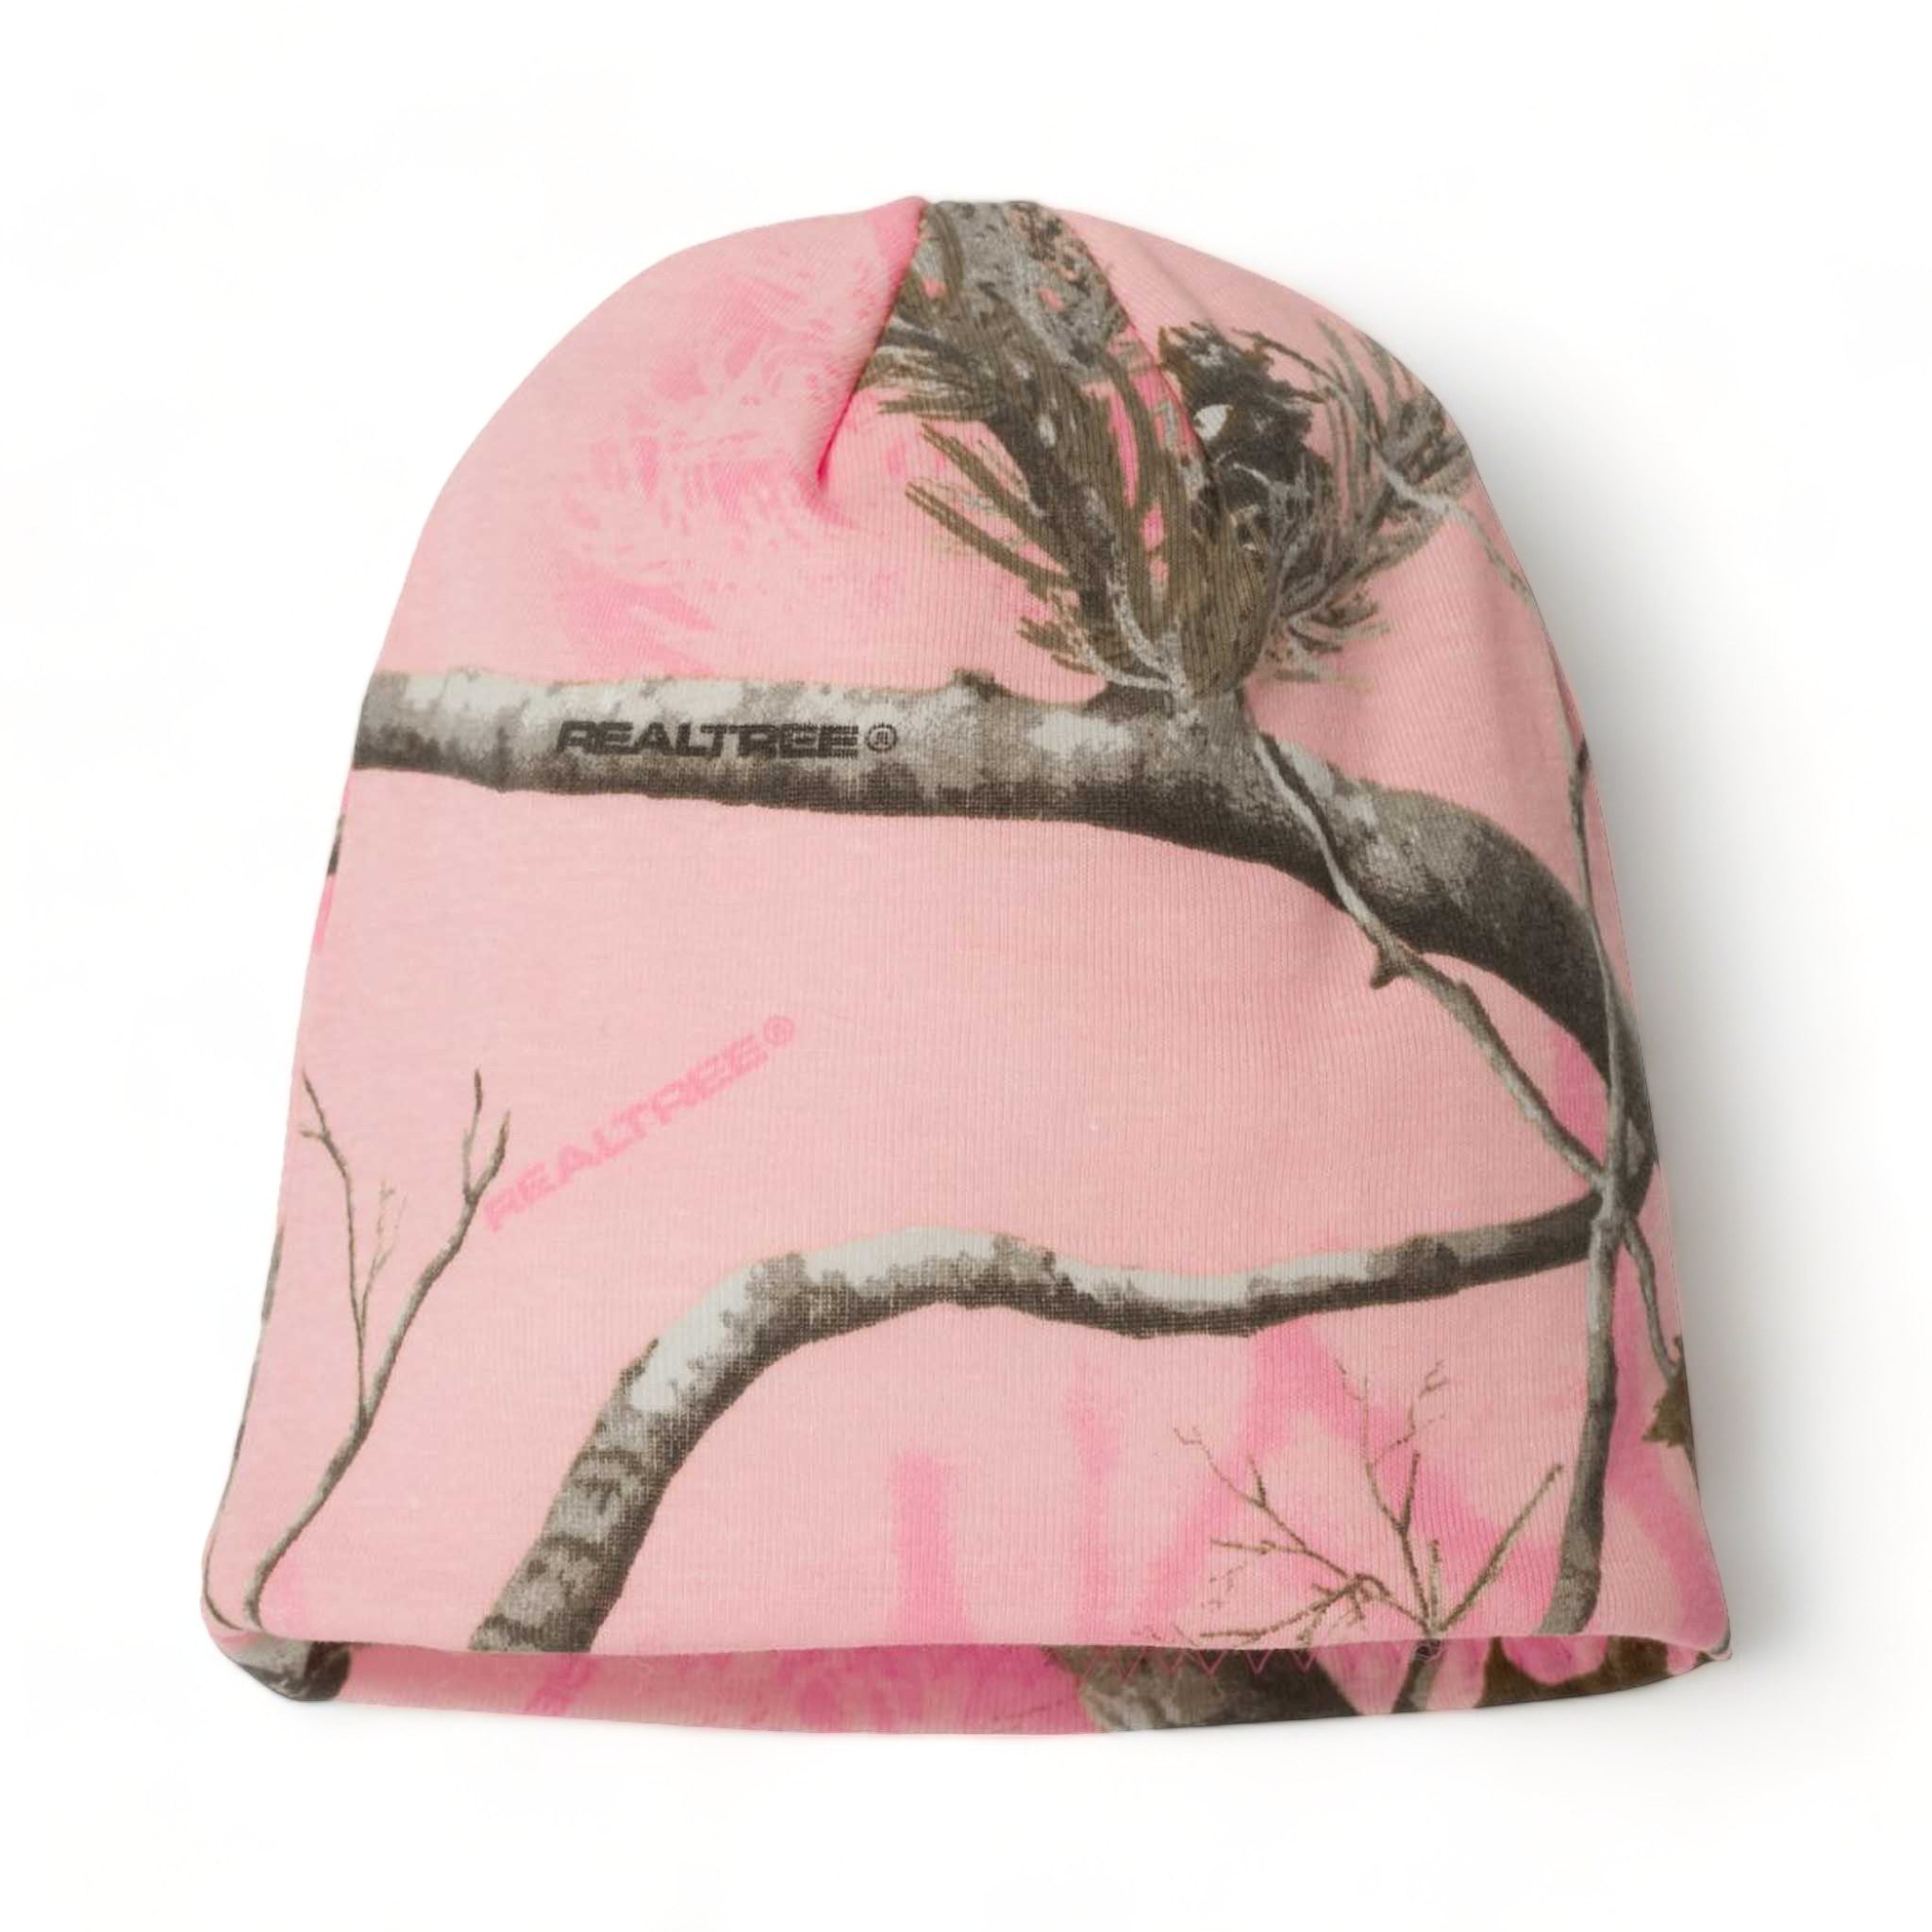 Front view of Kati LCB08 custom hat in pink realtree ap